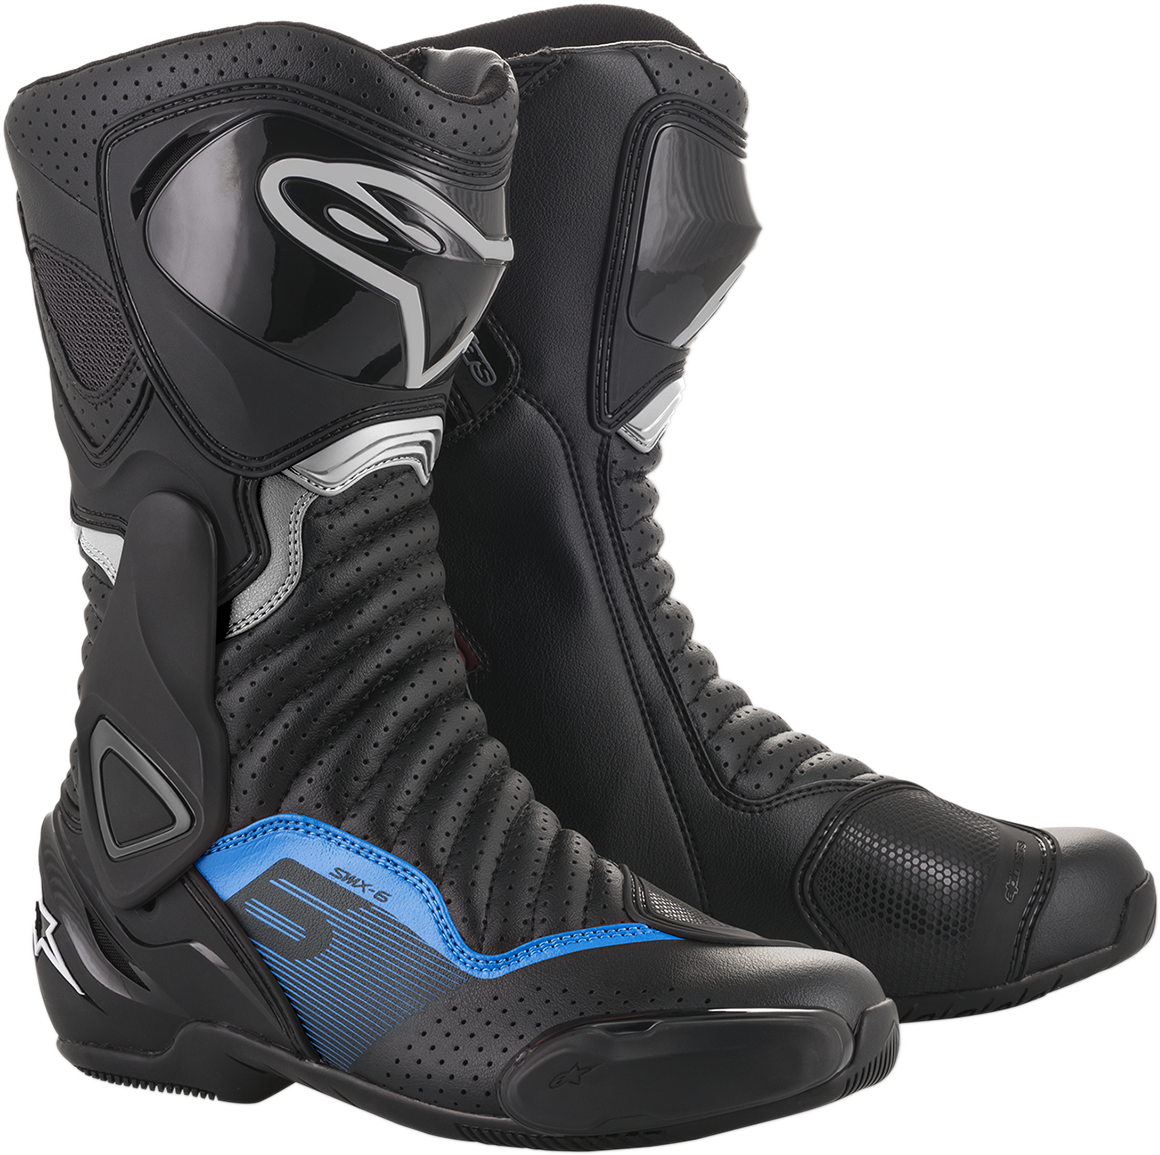 ALPINESTARS SMX-6 v2 Vented Boots - Black/Gray/Blue - US 6.5 / EU 40 2223017-1178-40